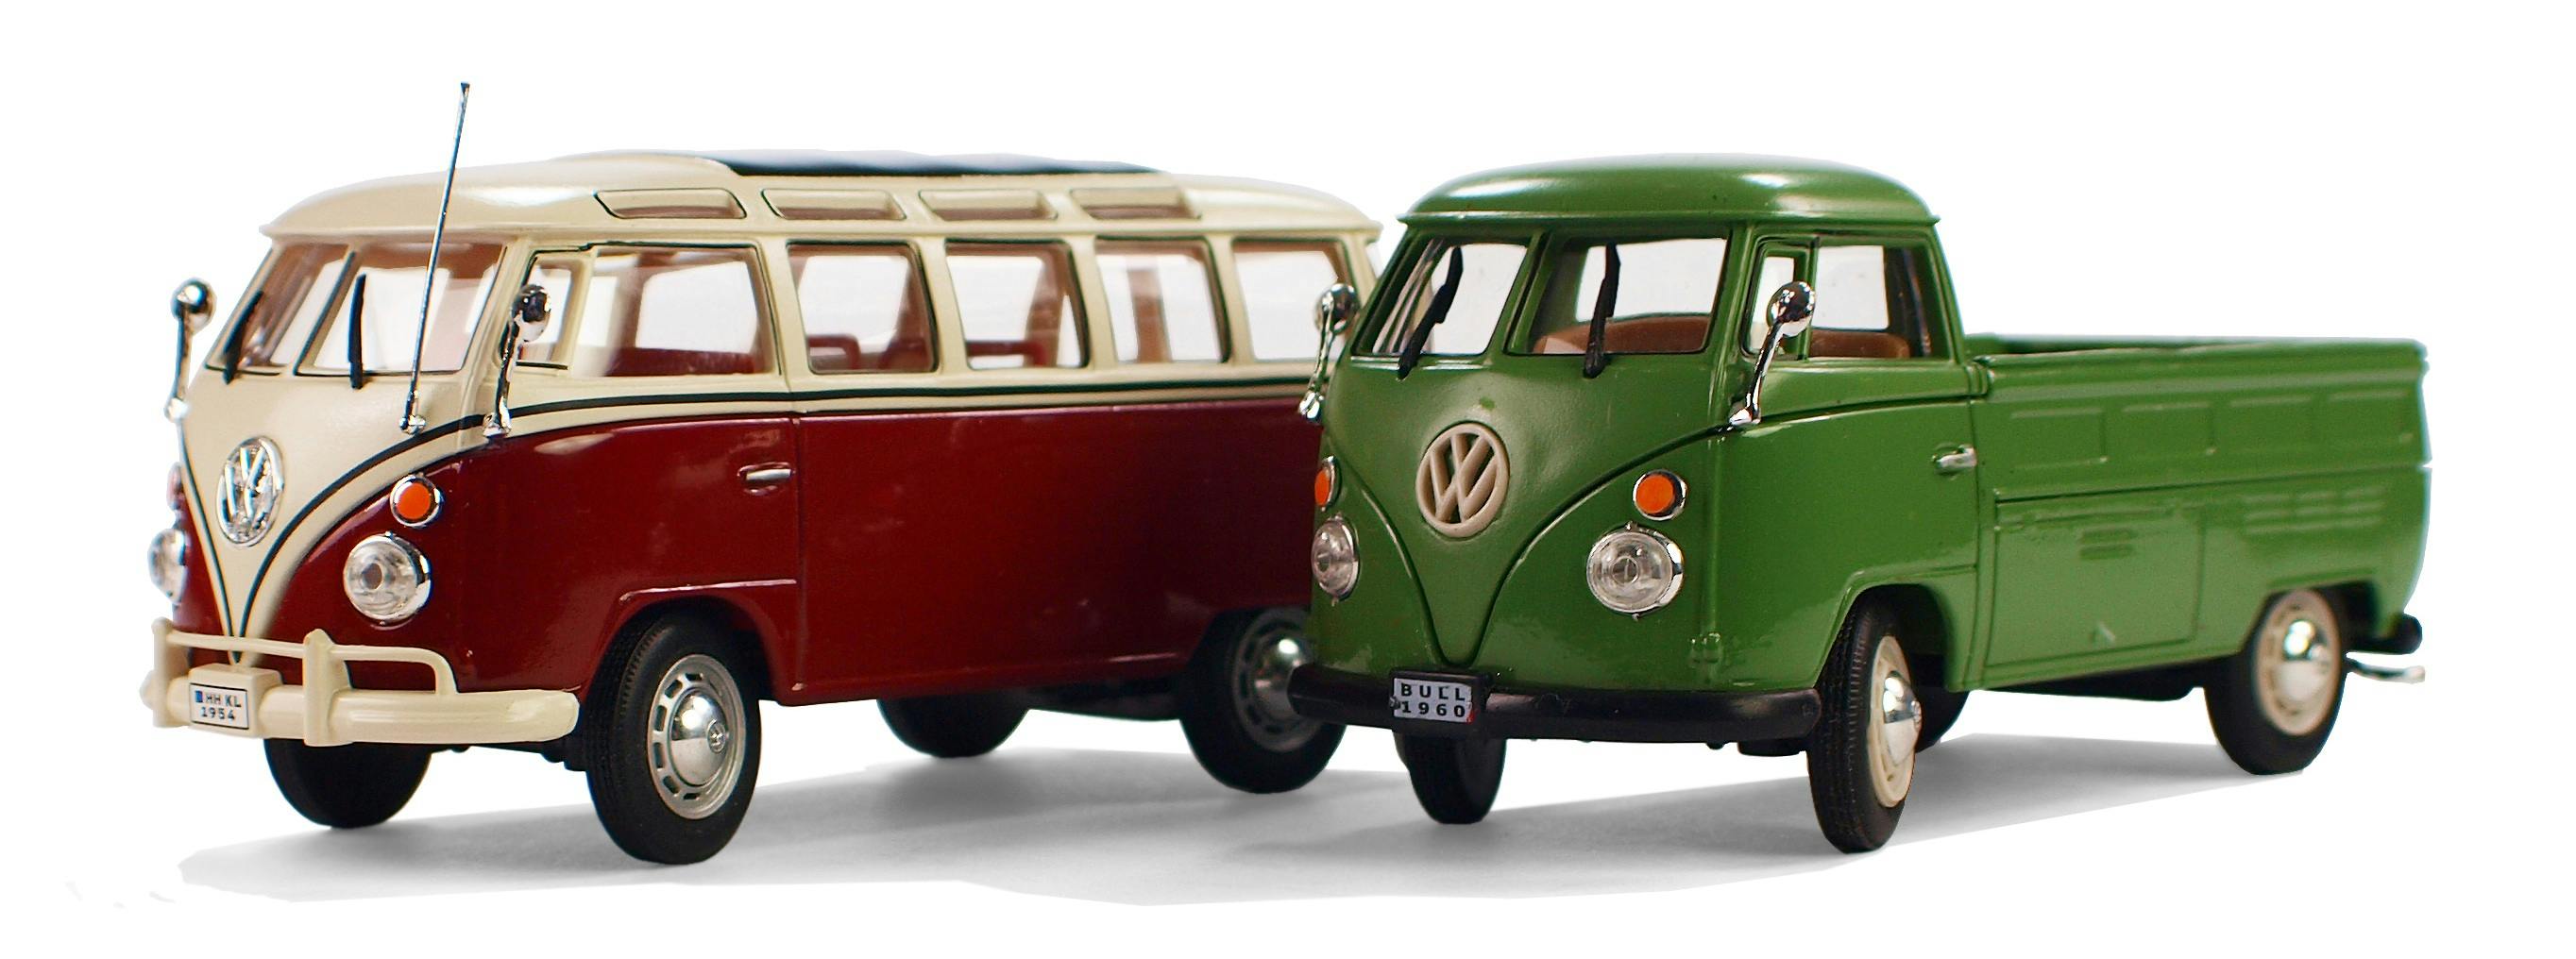 Free stock photo of vehicles, toys, volkswagen, hobby